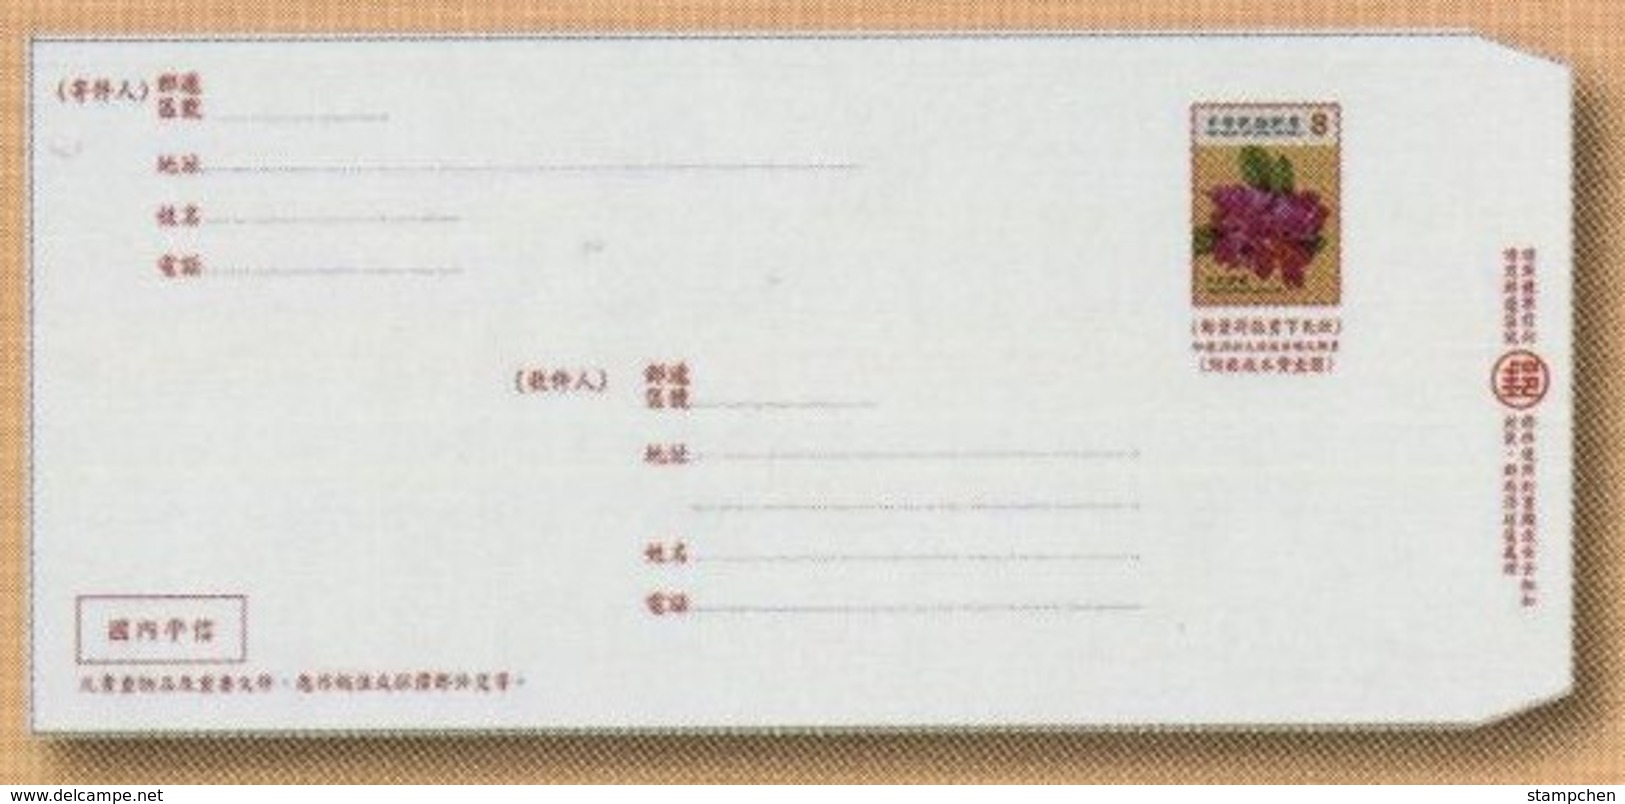 2017 Pre-stamp Domestic Ordinary Mail Cover-Lagerstroemia Speciosa Flower Stamp Plant Postal Stationary - Postal Stationery